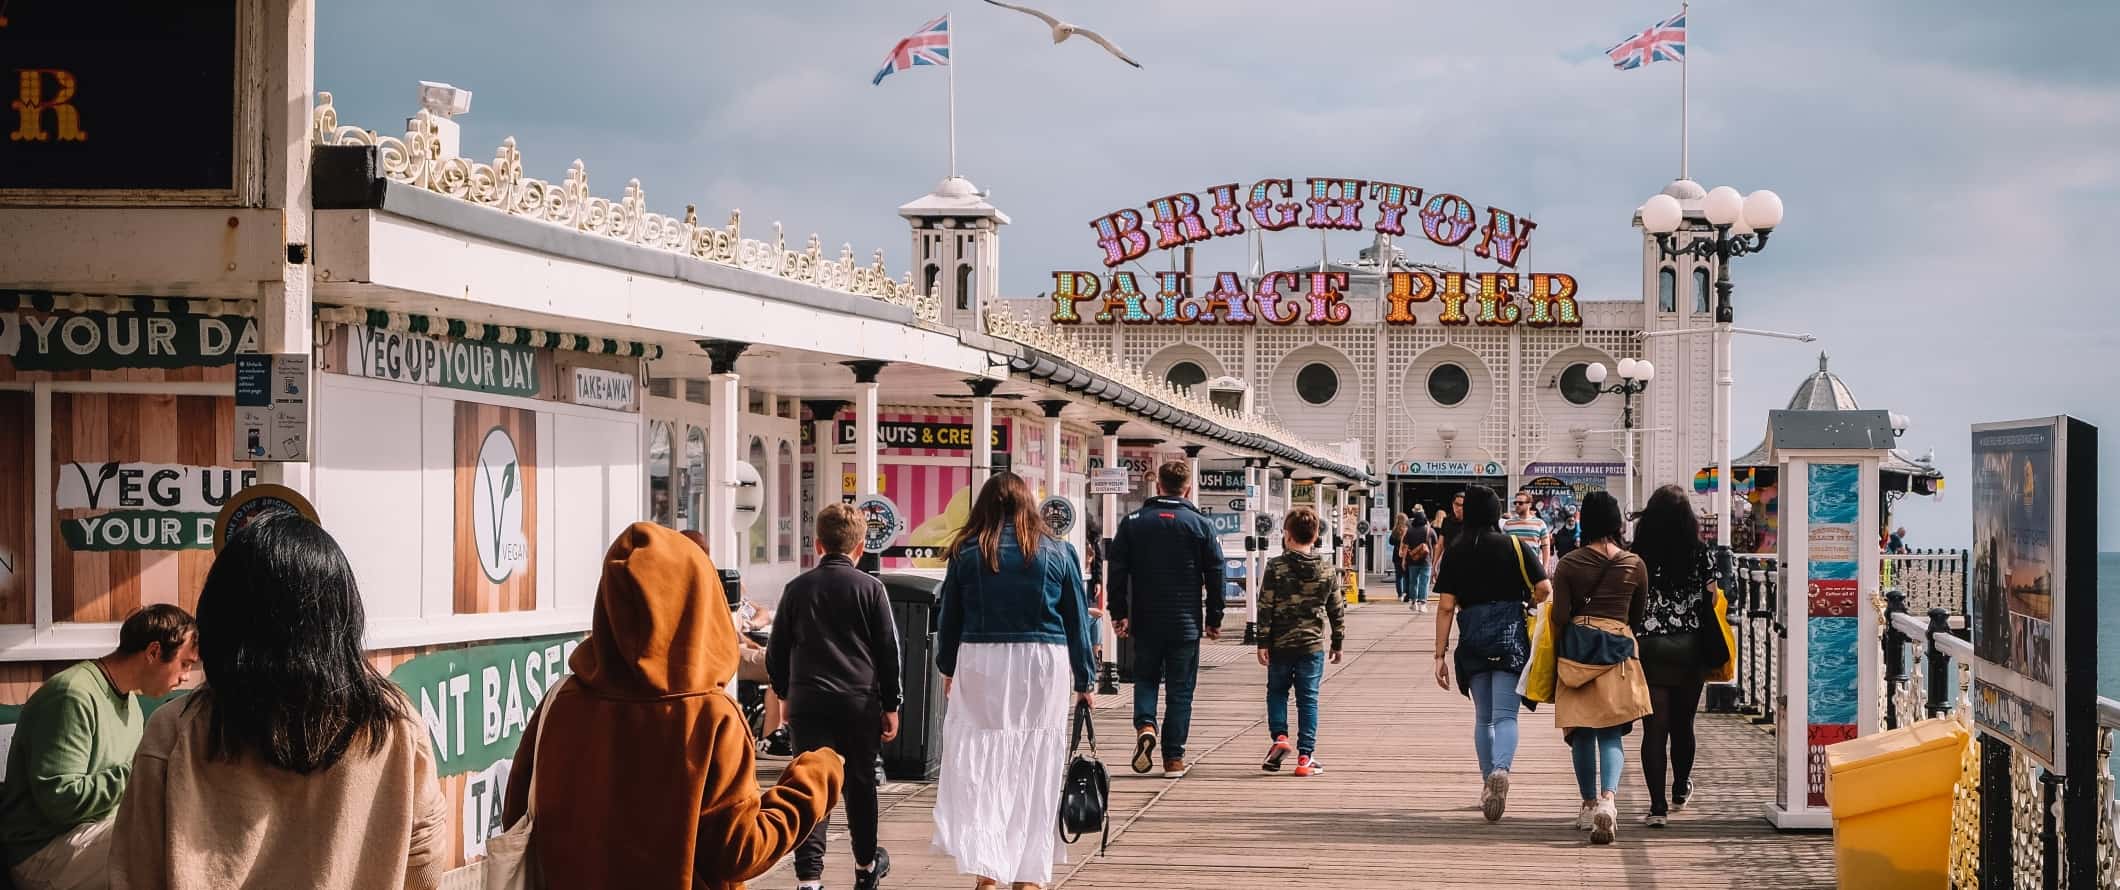 People walking around on the boardwalk on the Brighton pier in Brighton, UK